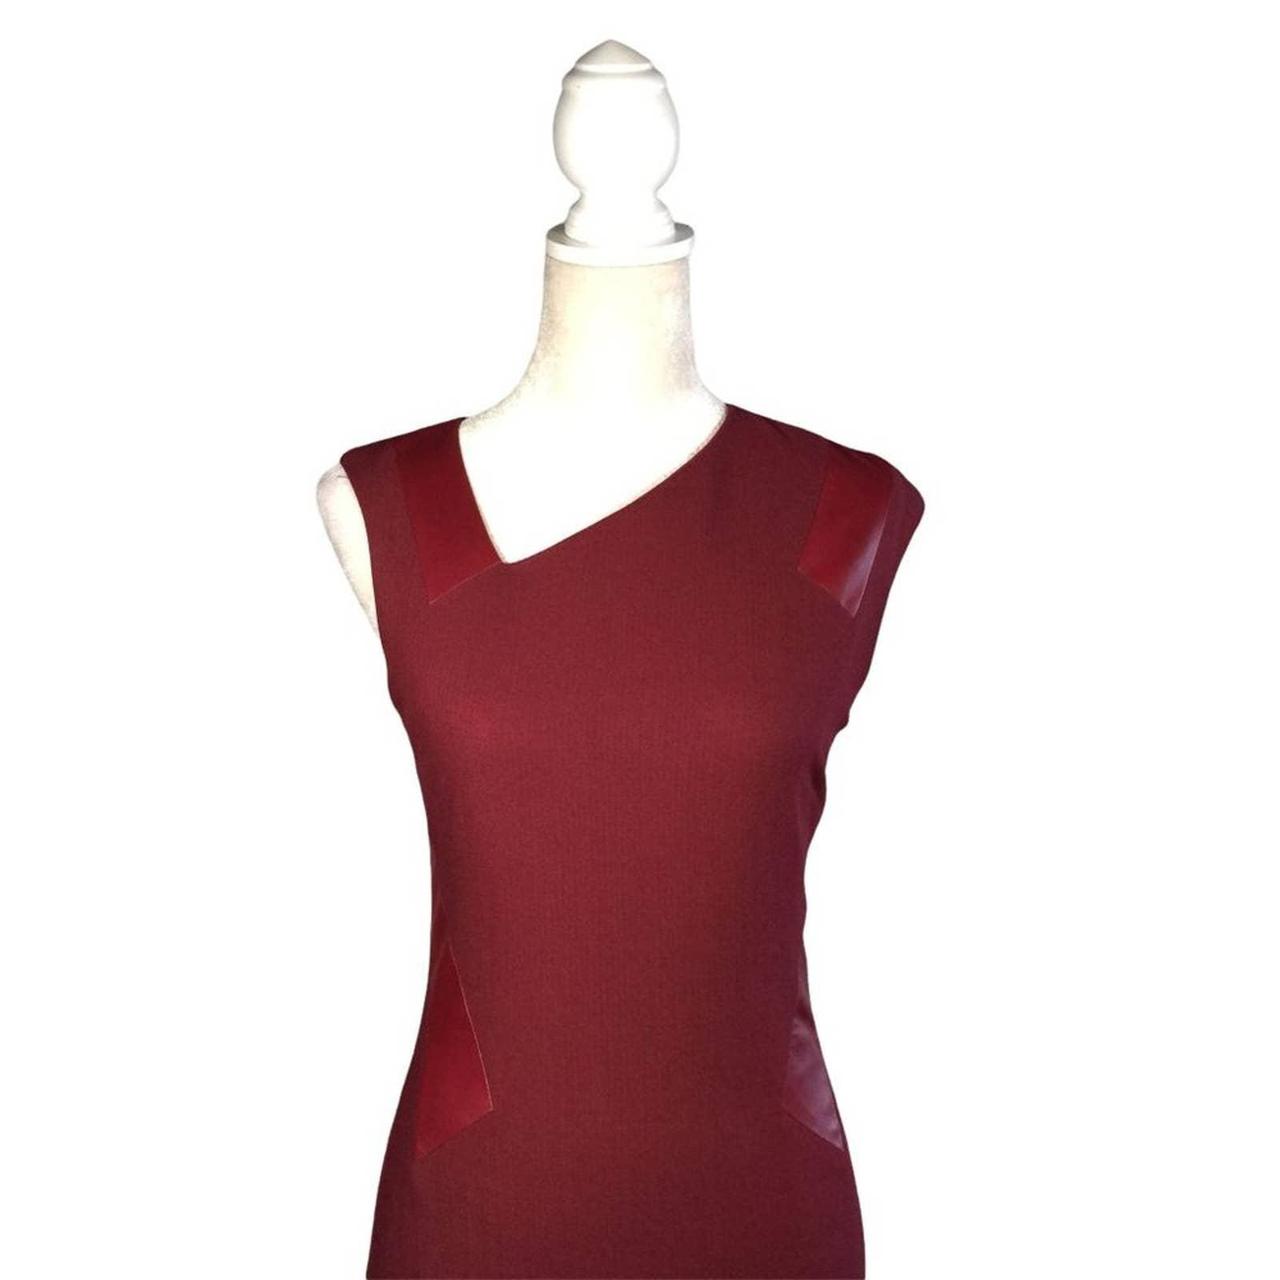 Product Image 2 - HELMUT LANG pxl dress burgundy